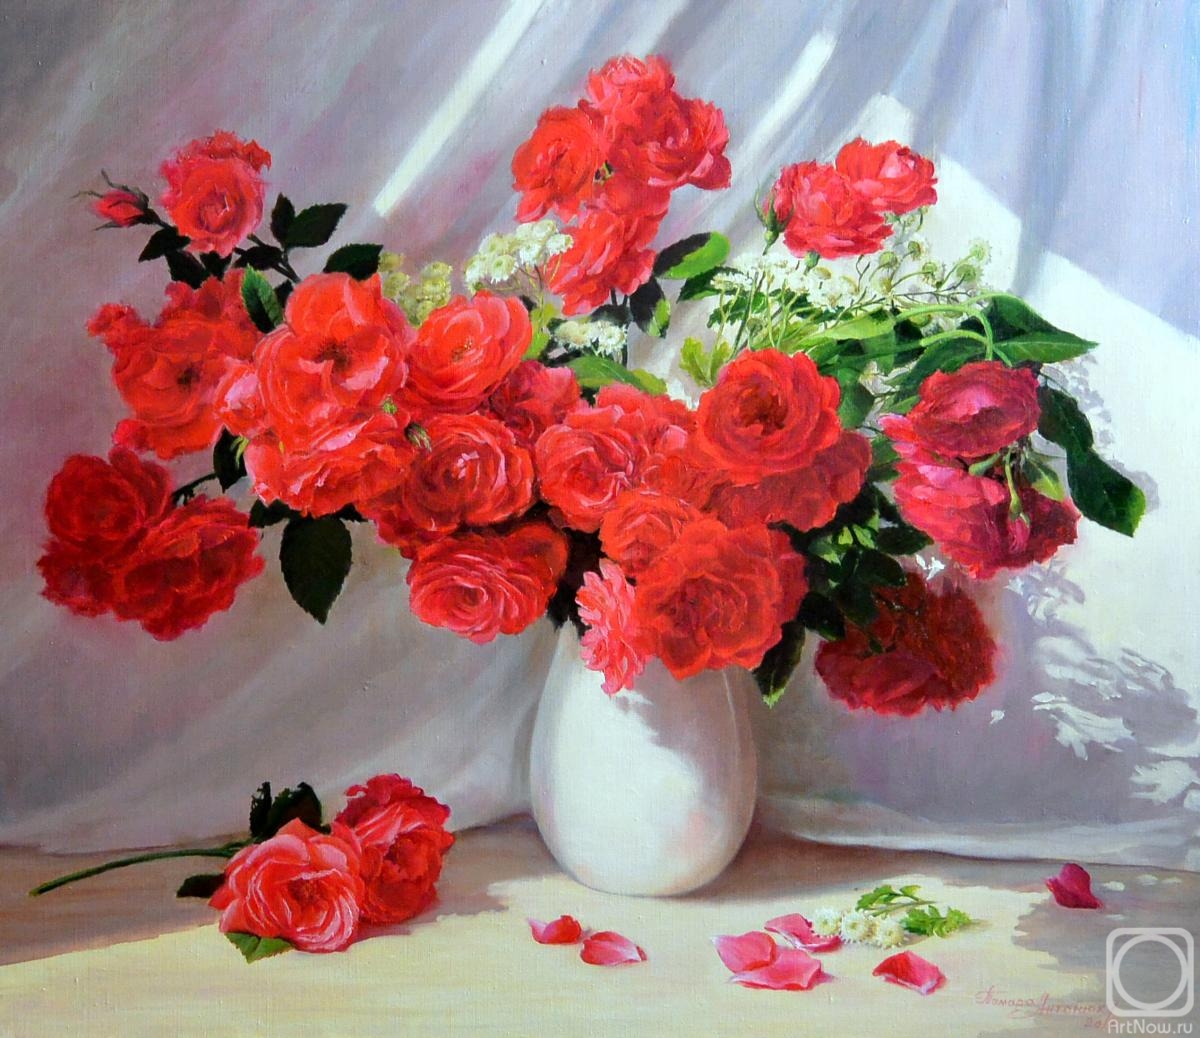 Antonyuk Tamara. A bouquet of red roses